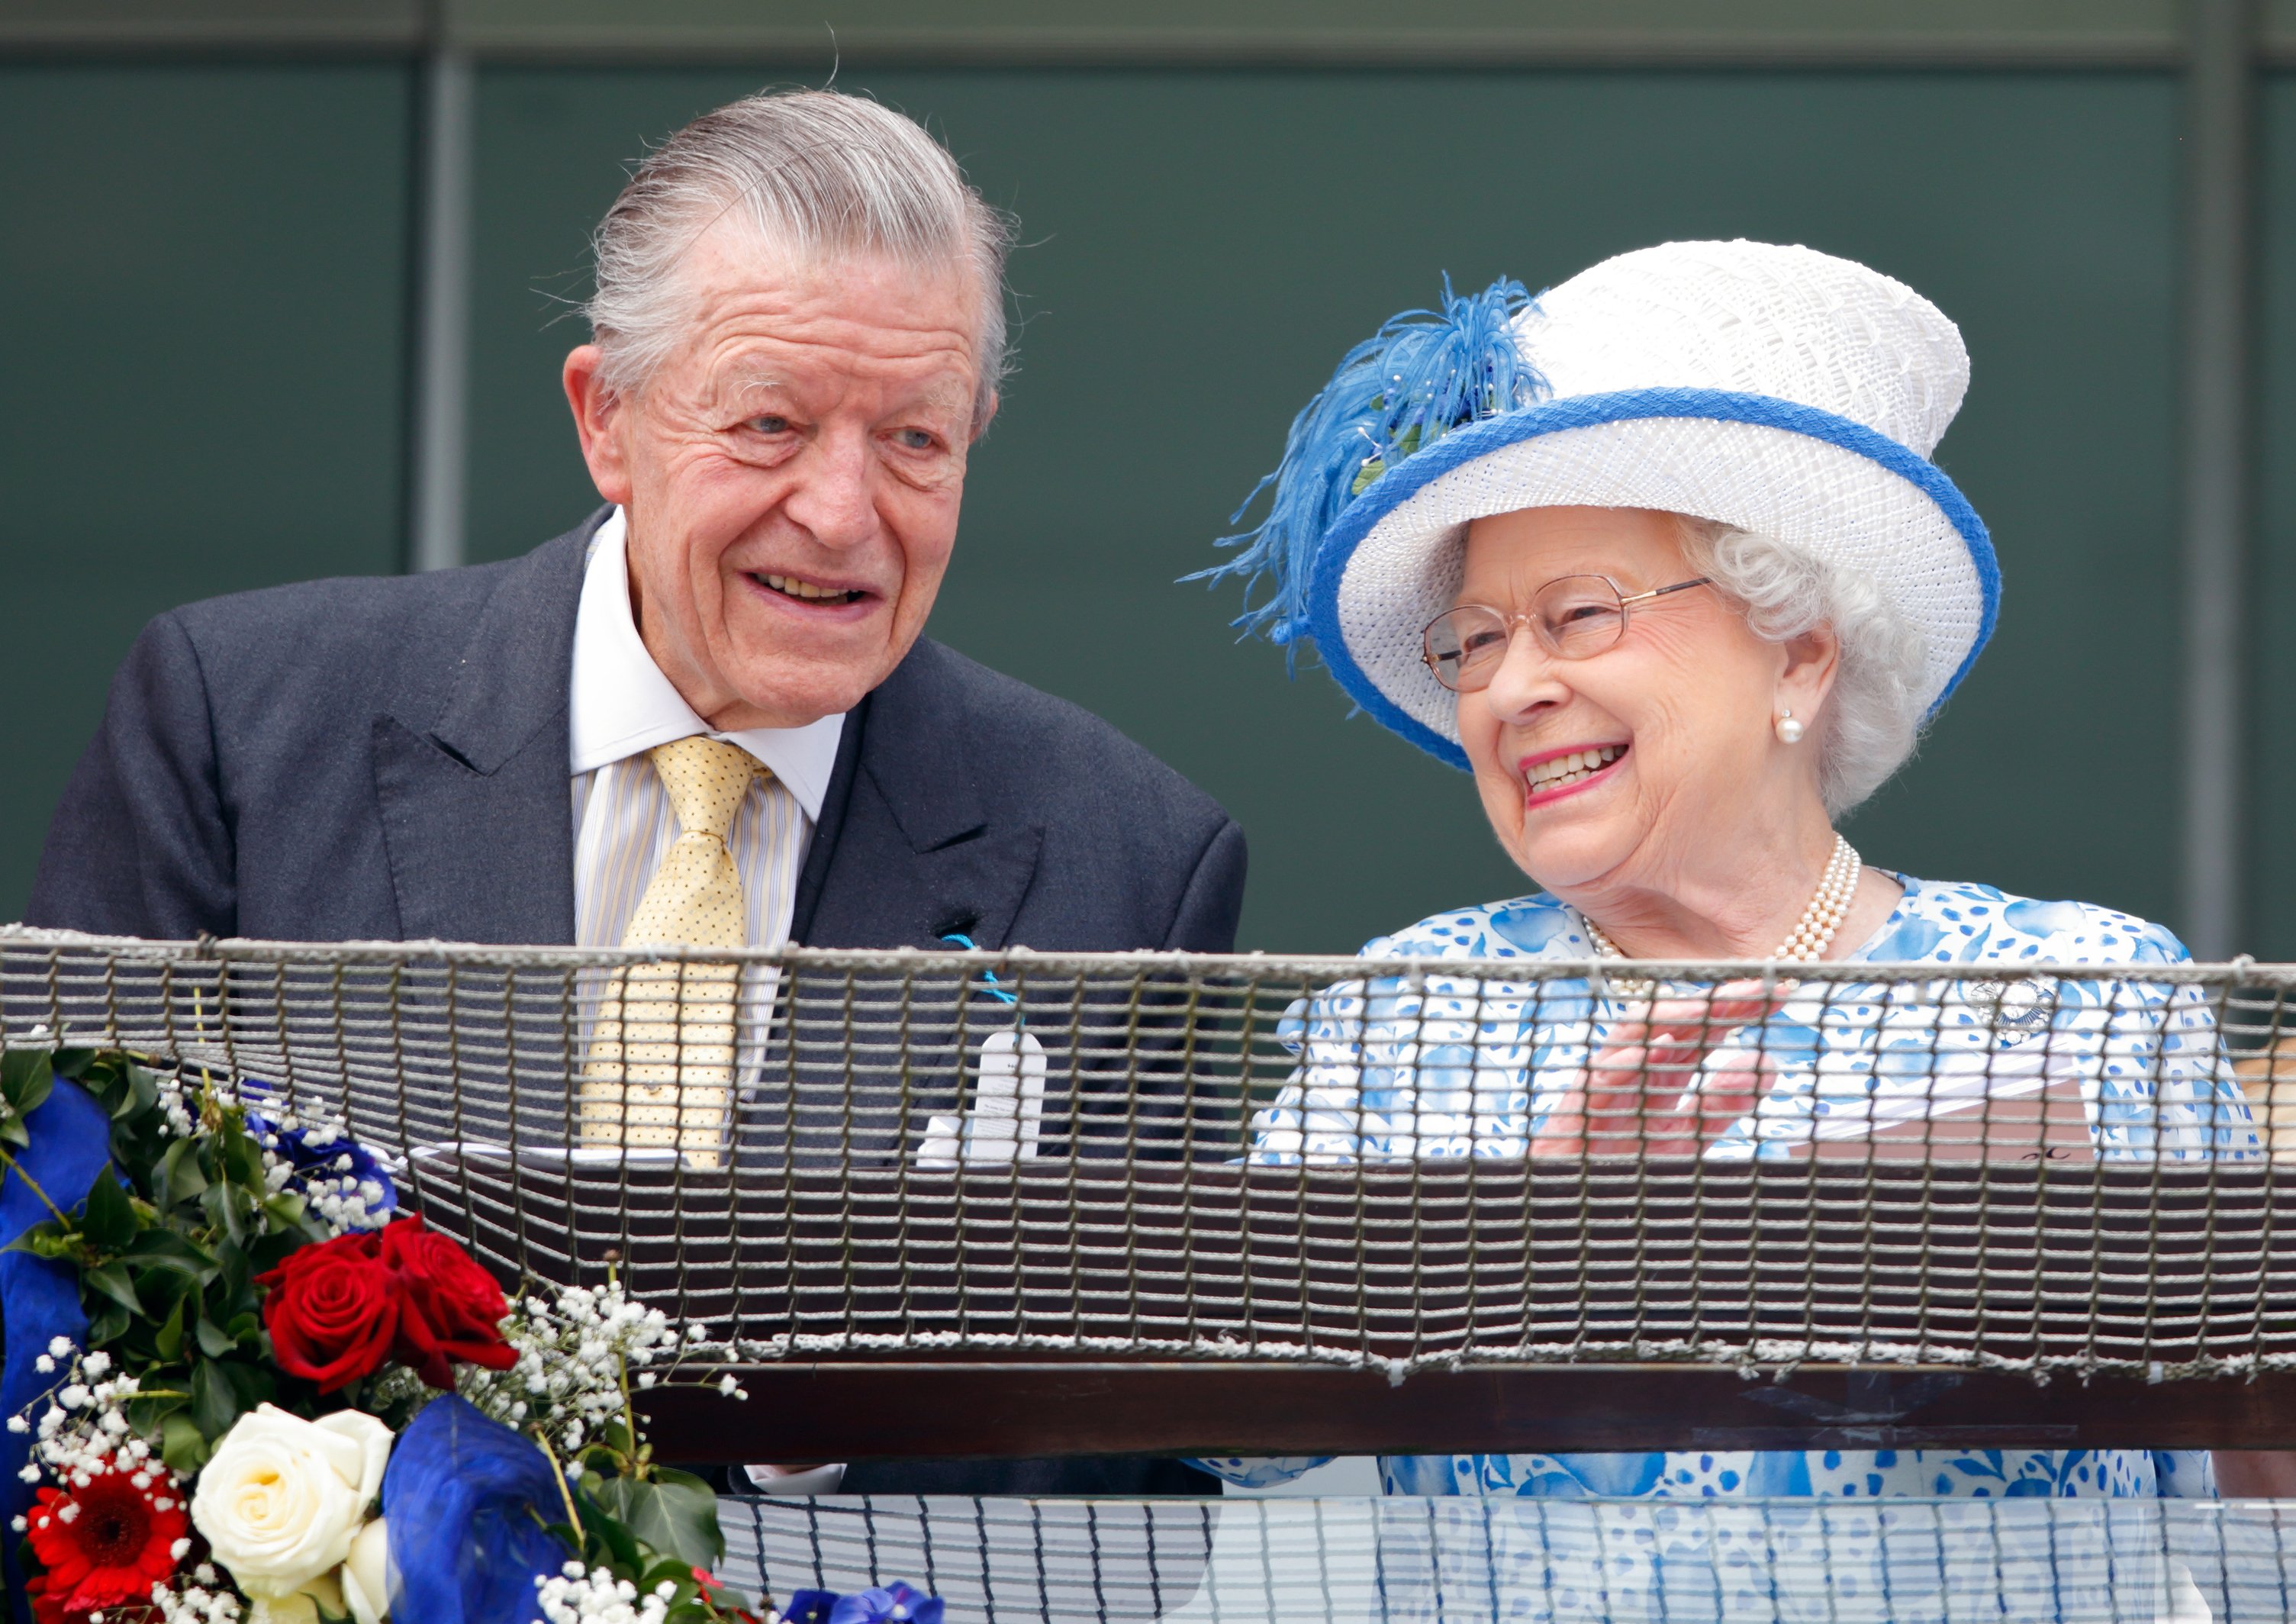 Reina Elizabeth II y Sir Michael Oswald en Surrey, Inglaterra en junio de 2016. | Foto: Getty Images